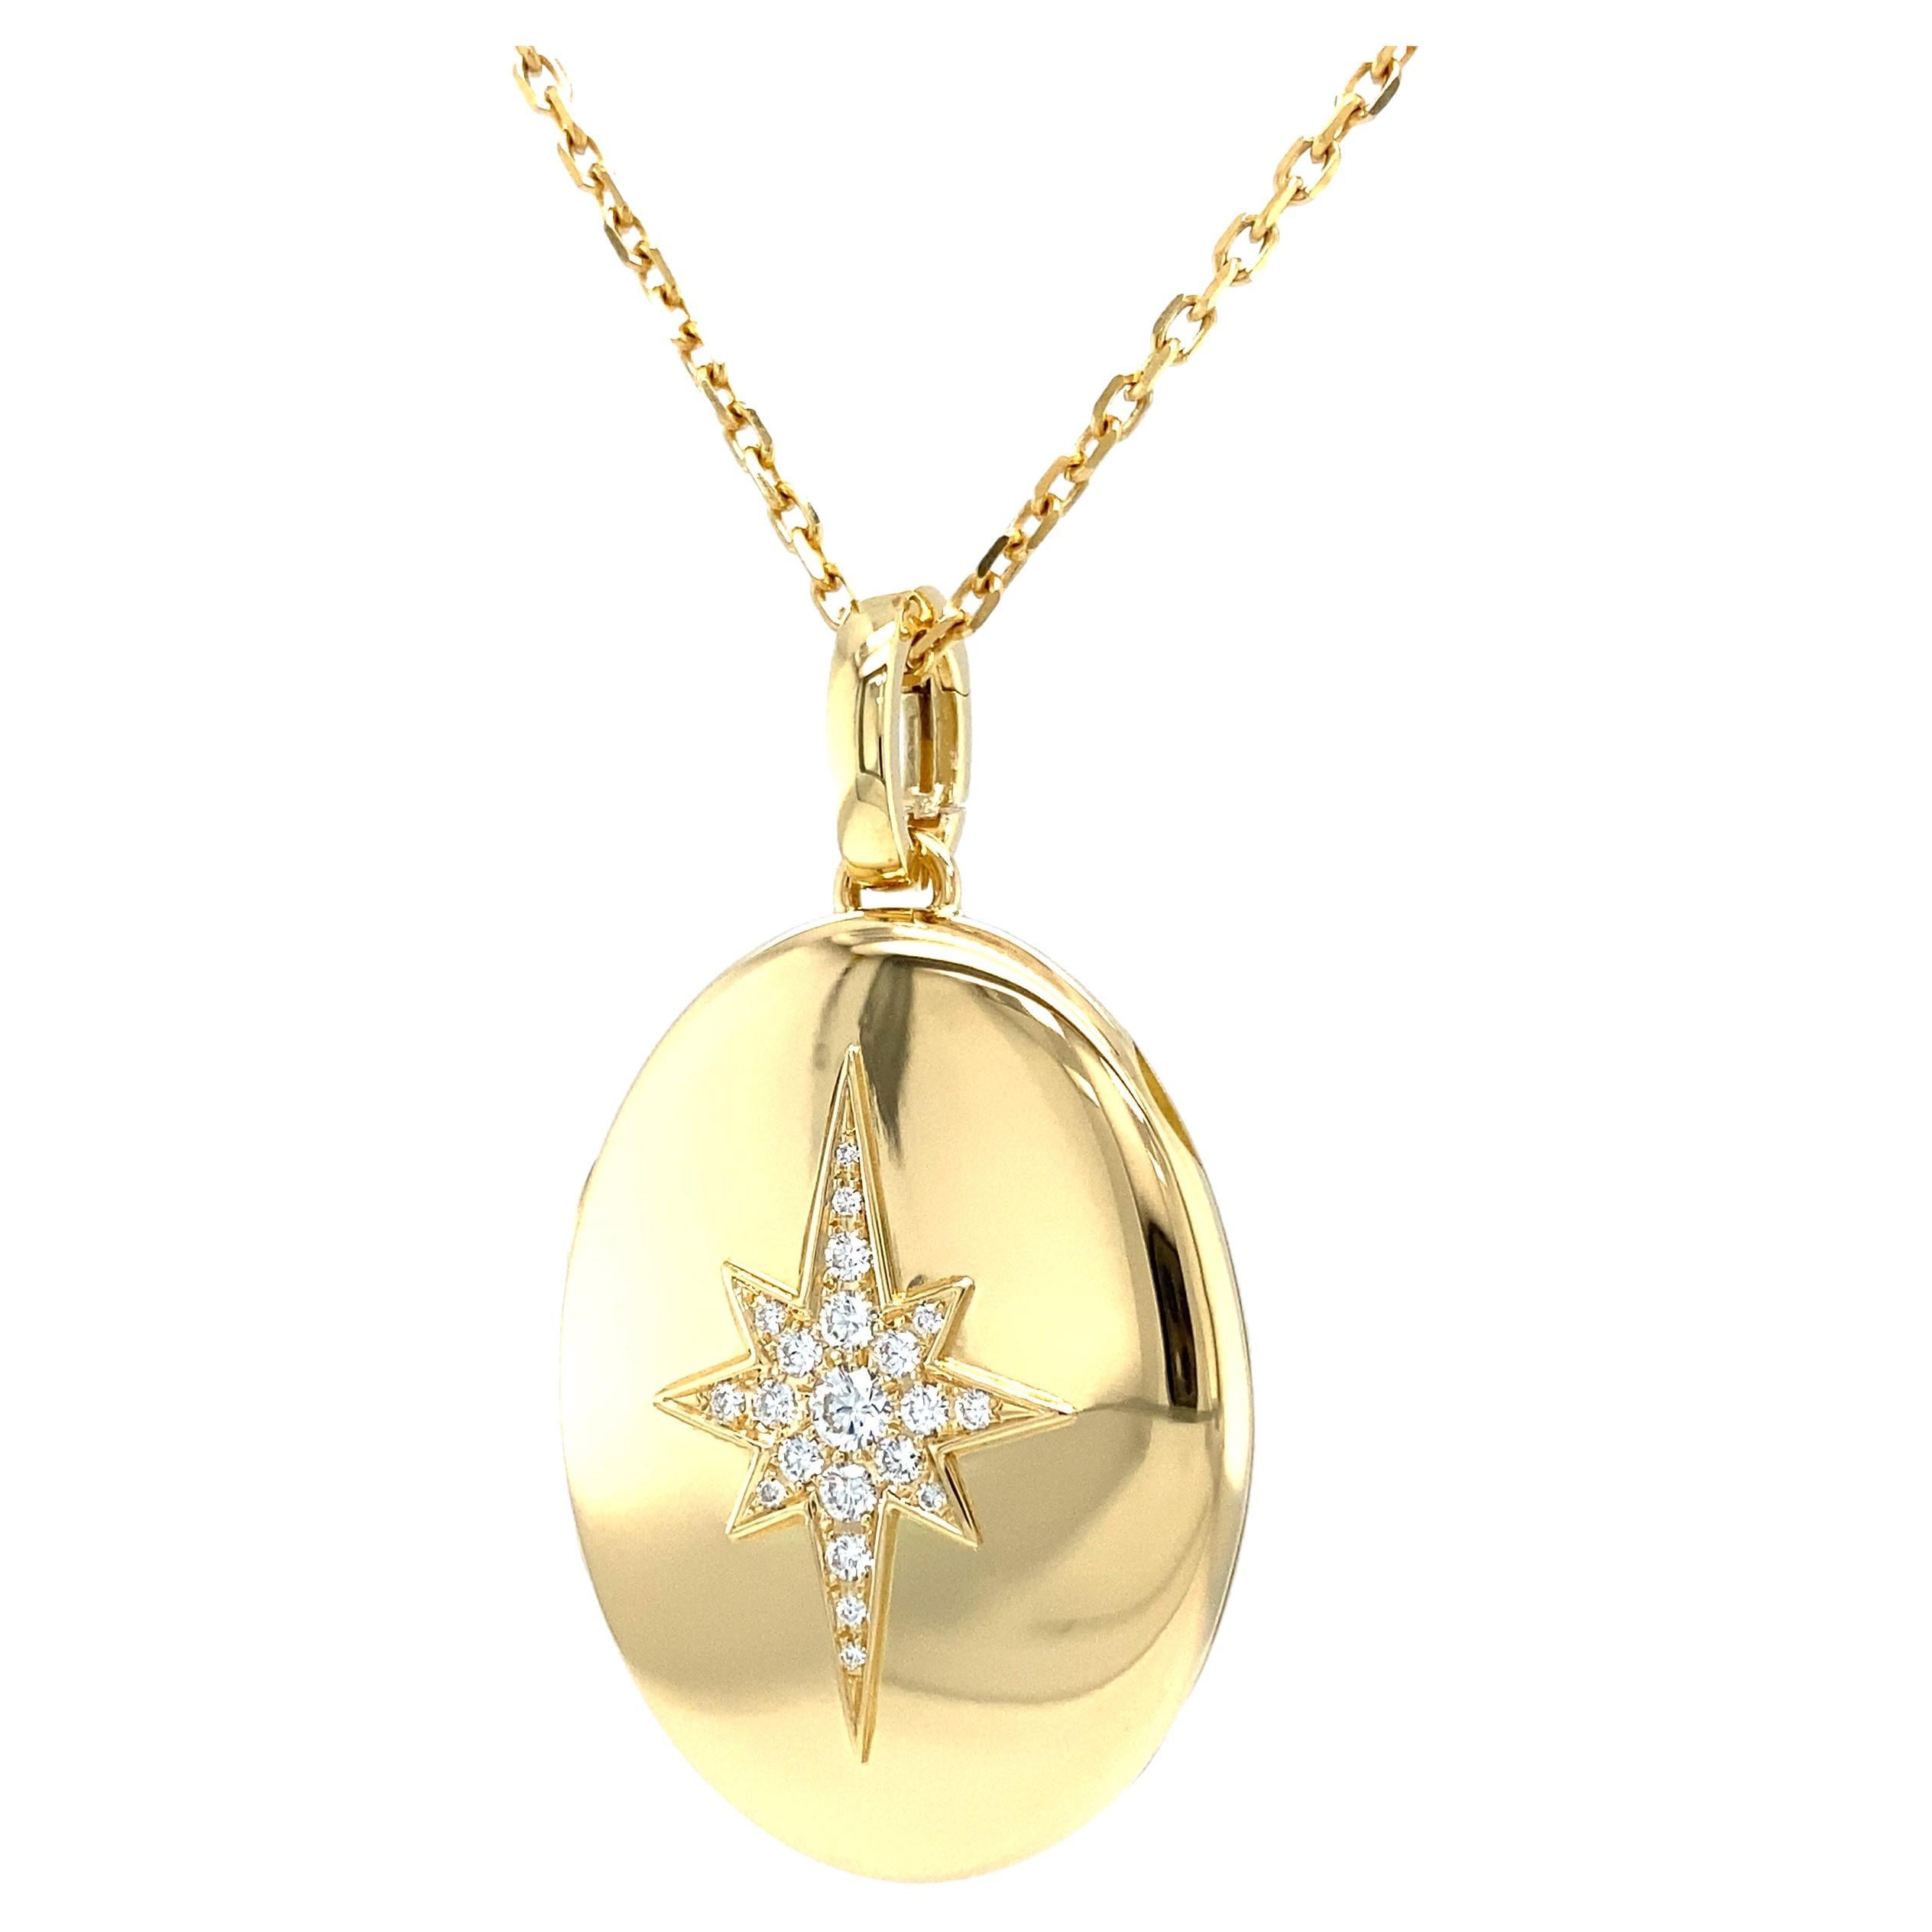 Ovaler polierter Medaillon-Anhänger Halskette - 18k Gelbgold - 9 Diamanten 0,14ct G VS